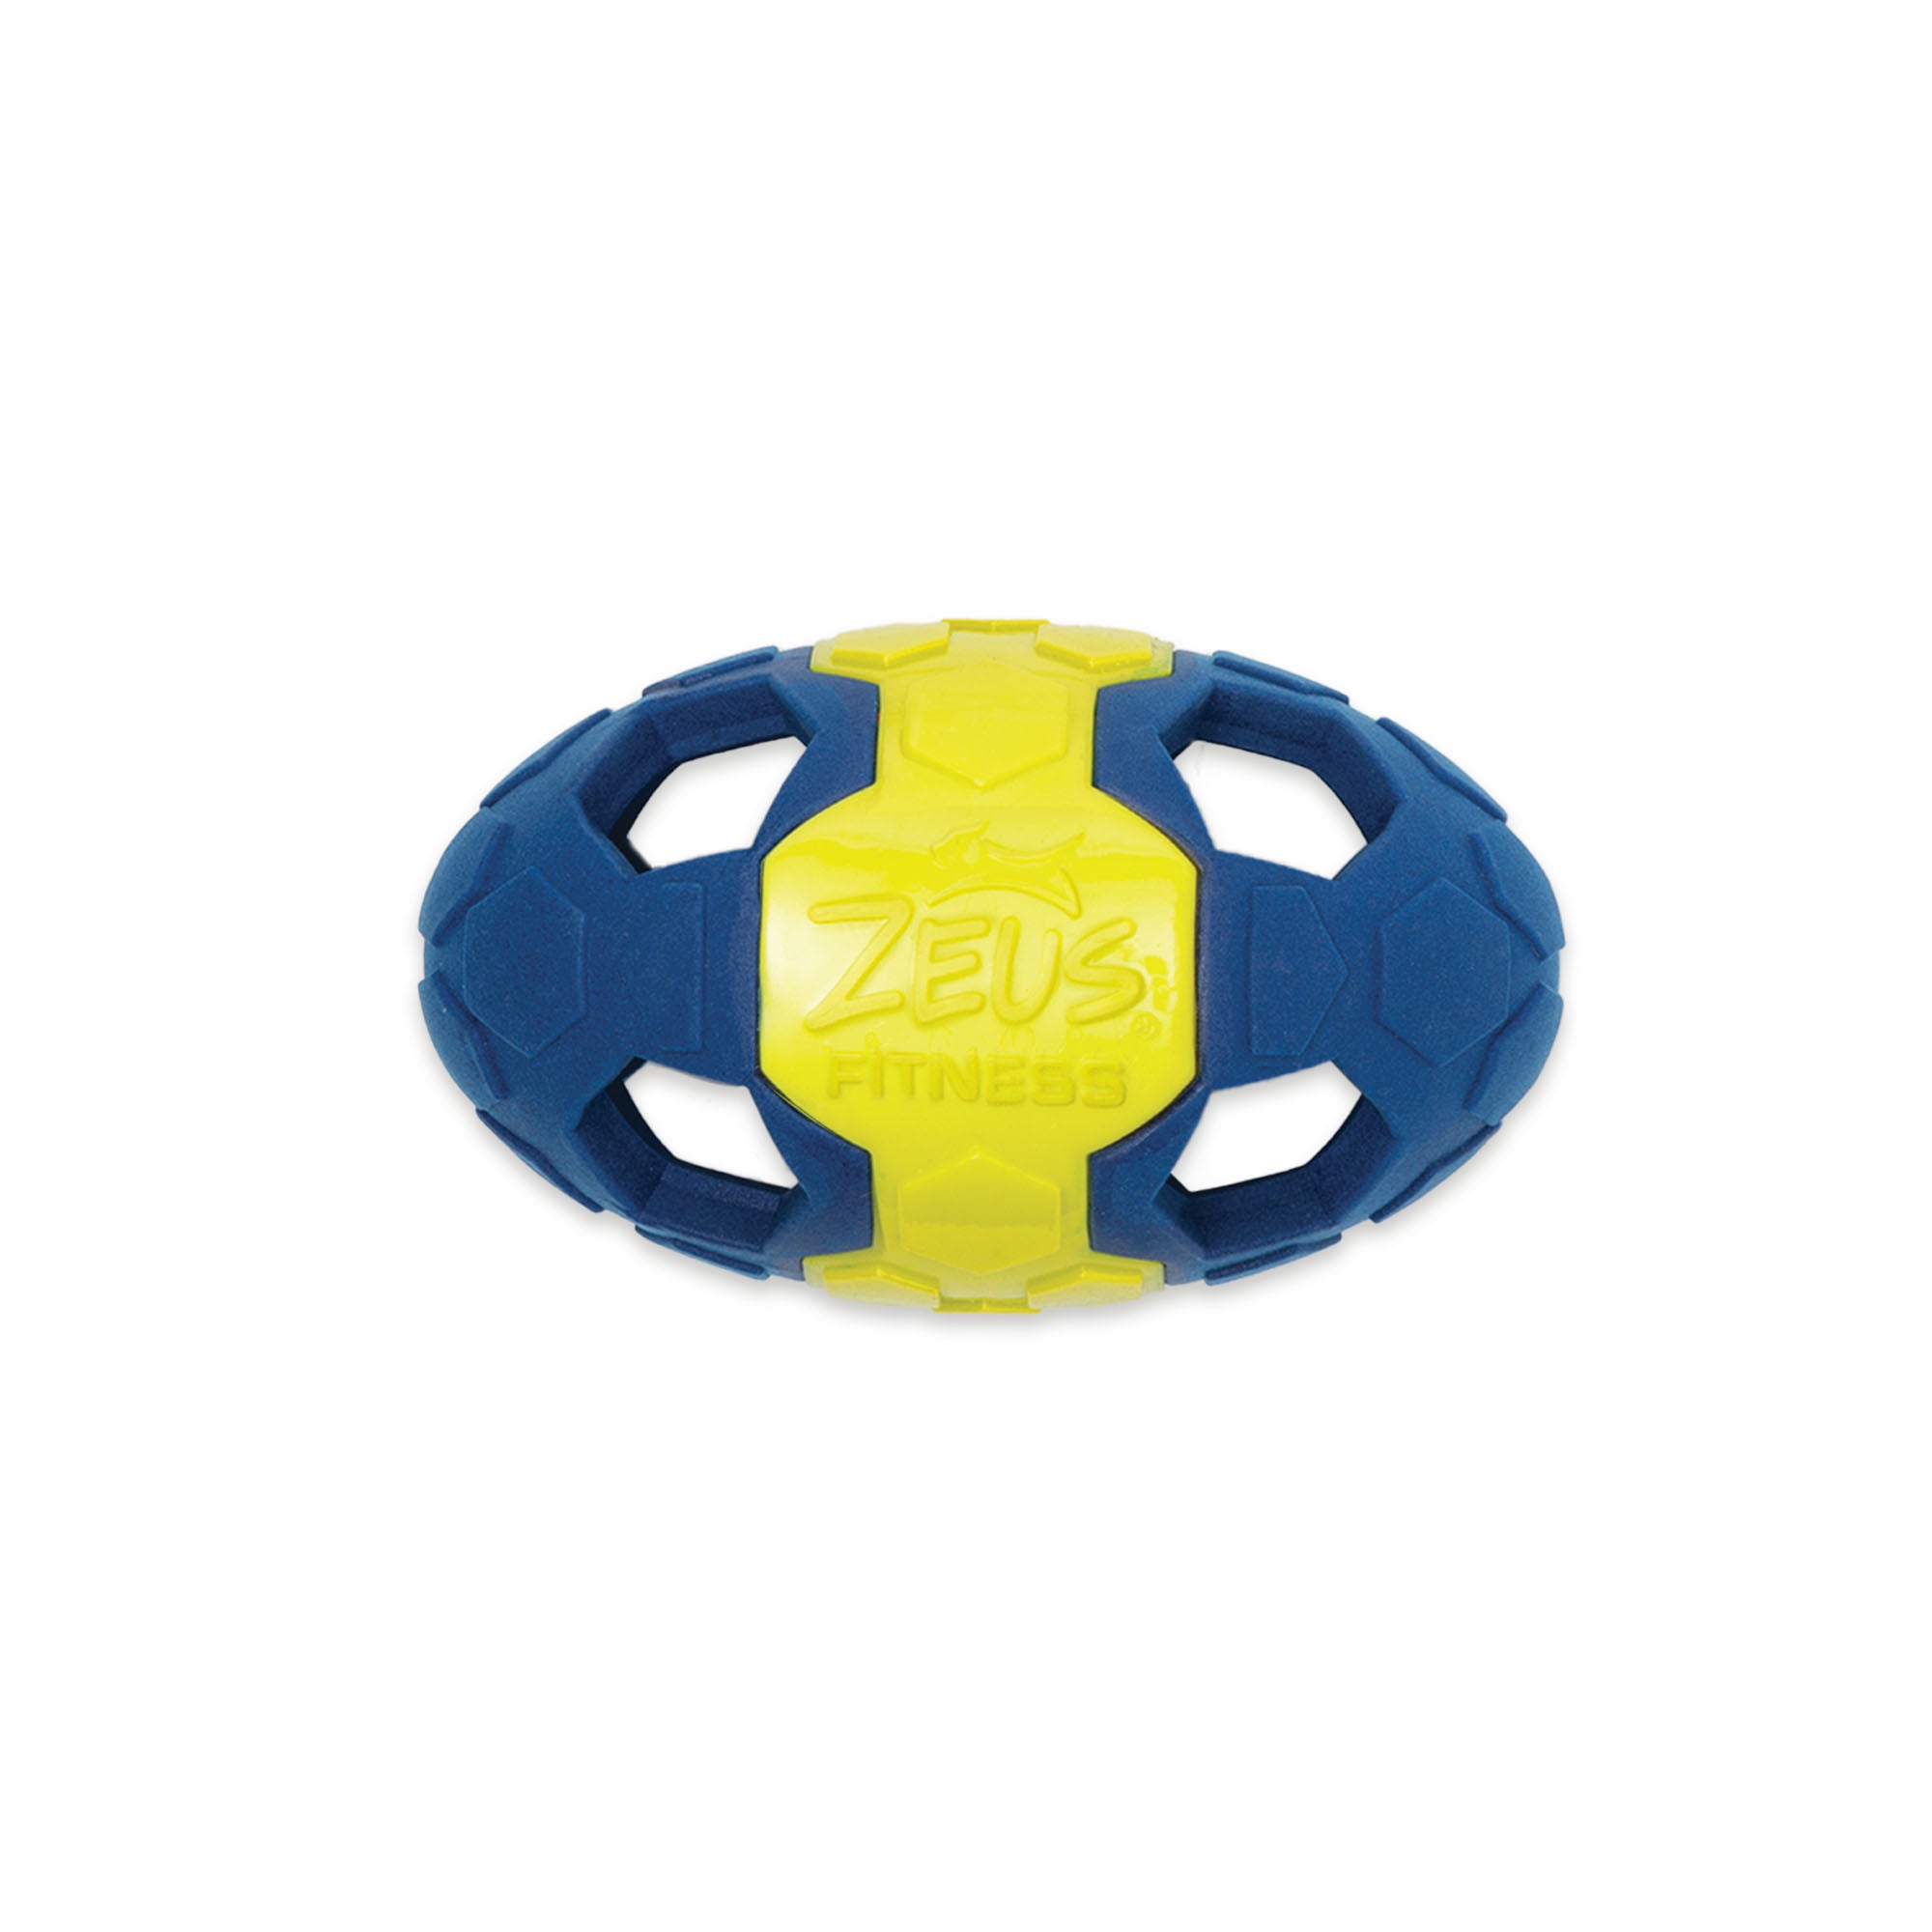 Zeus Fitness Dog Toys Fetch Football 2 Sizes